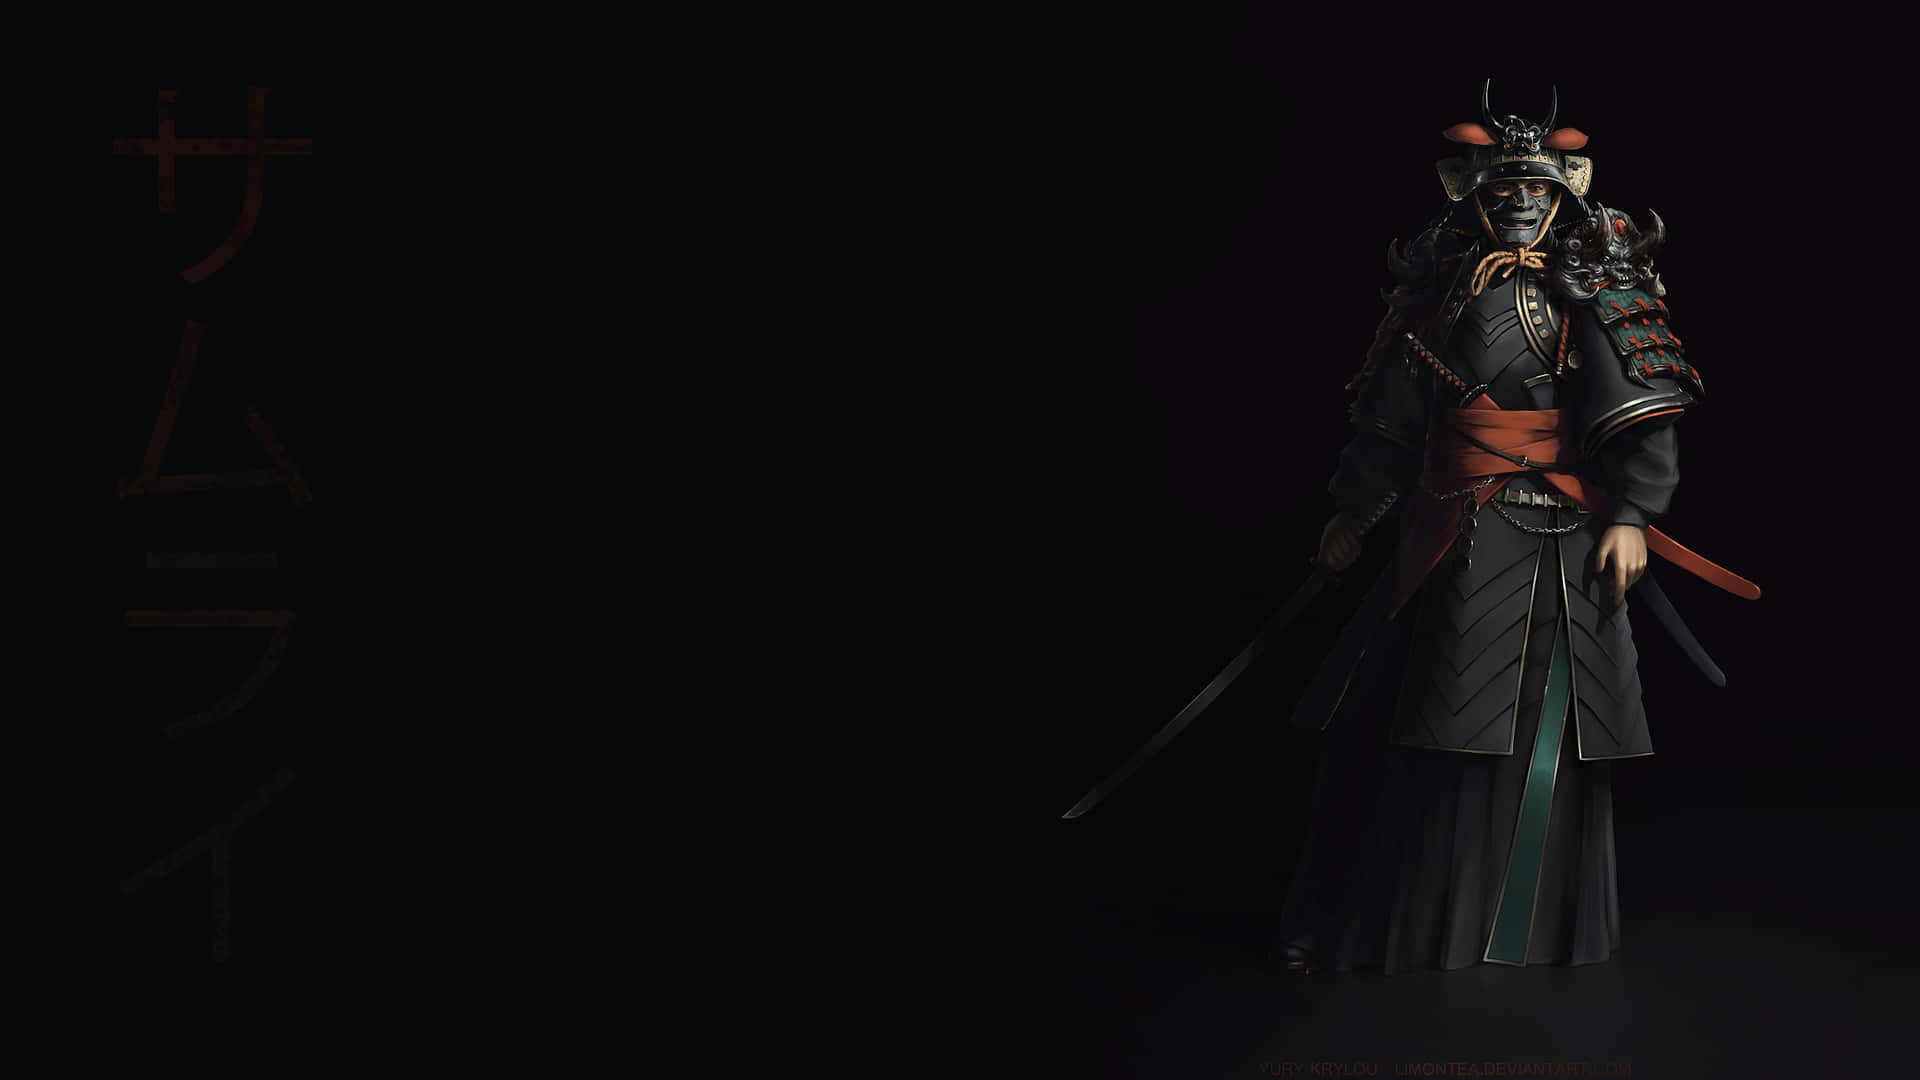 Dark Japanese Samurai Warrior With Katana Wallpaper